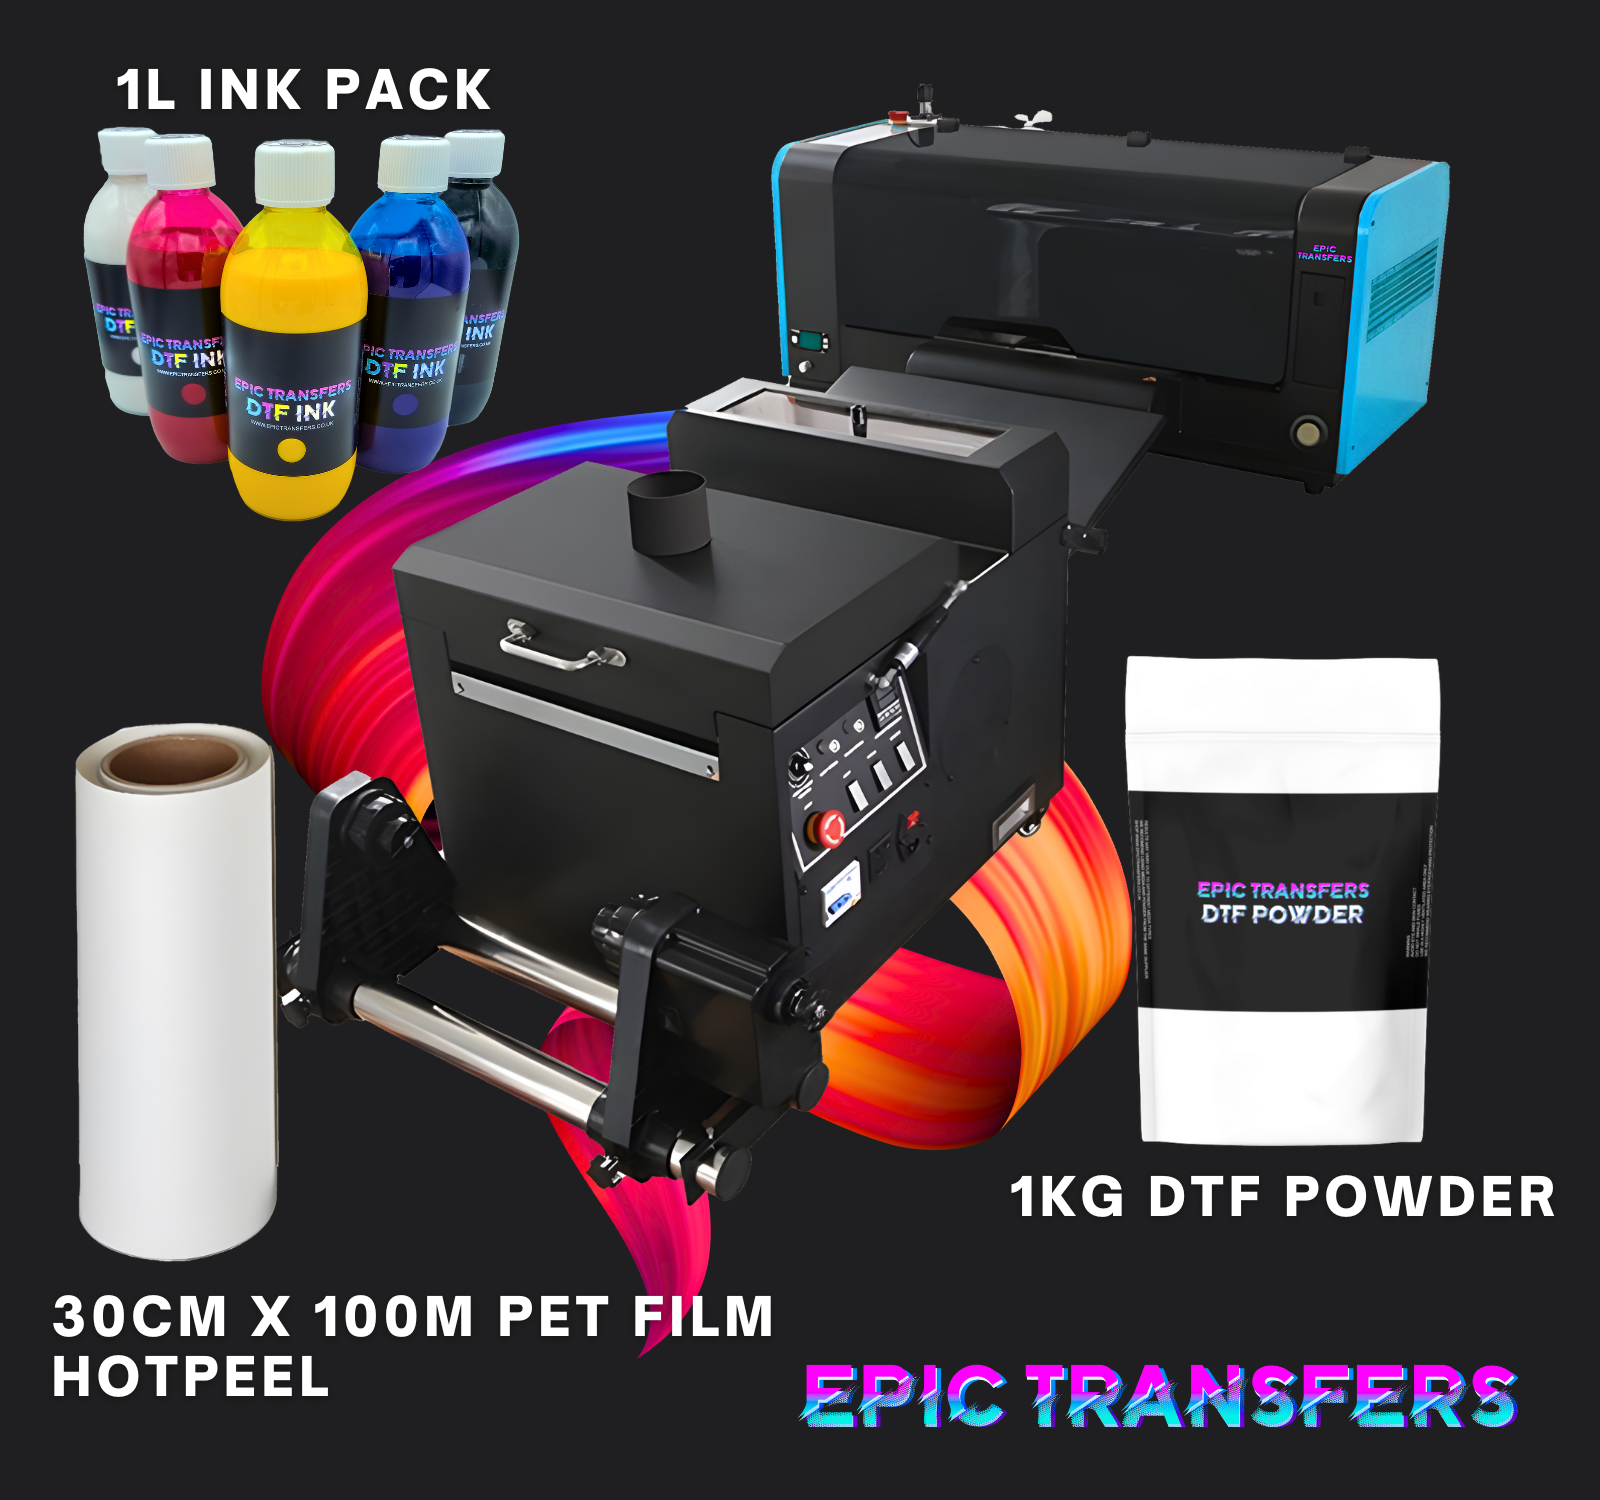 1KG Powder For Direct Transfer Film Printing For DTF Ink Printing PET Film  Printing And Transfer